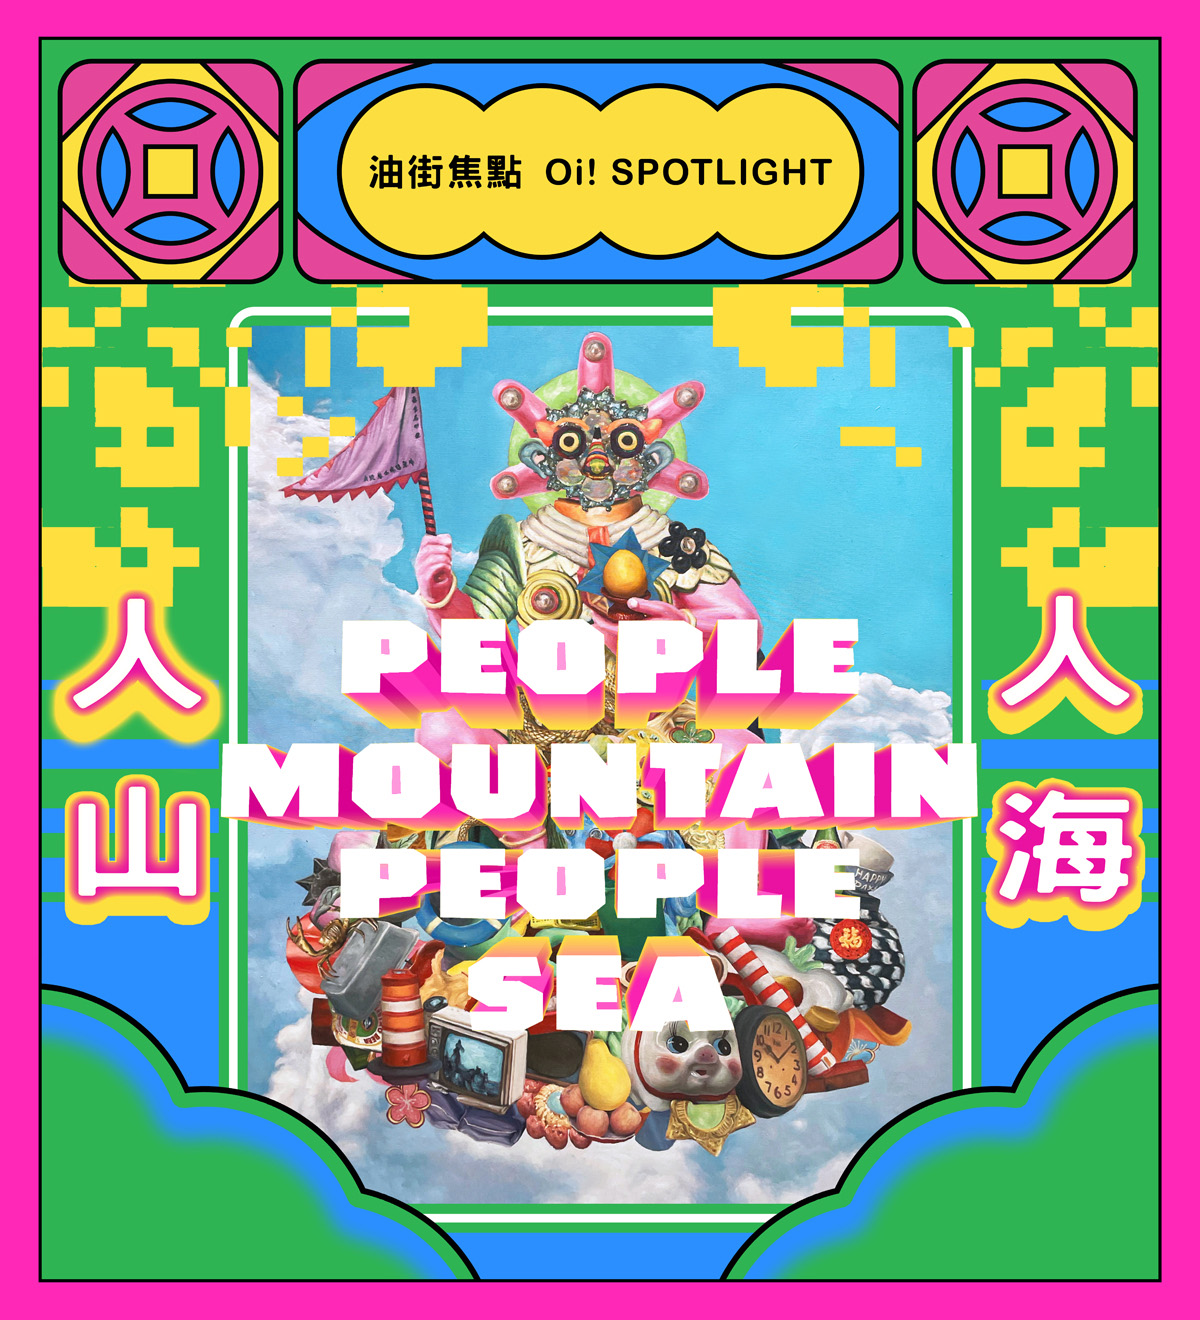 Oi! Spotlight: People Mountain People Sea by Gary Card - mobile